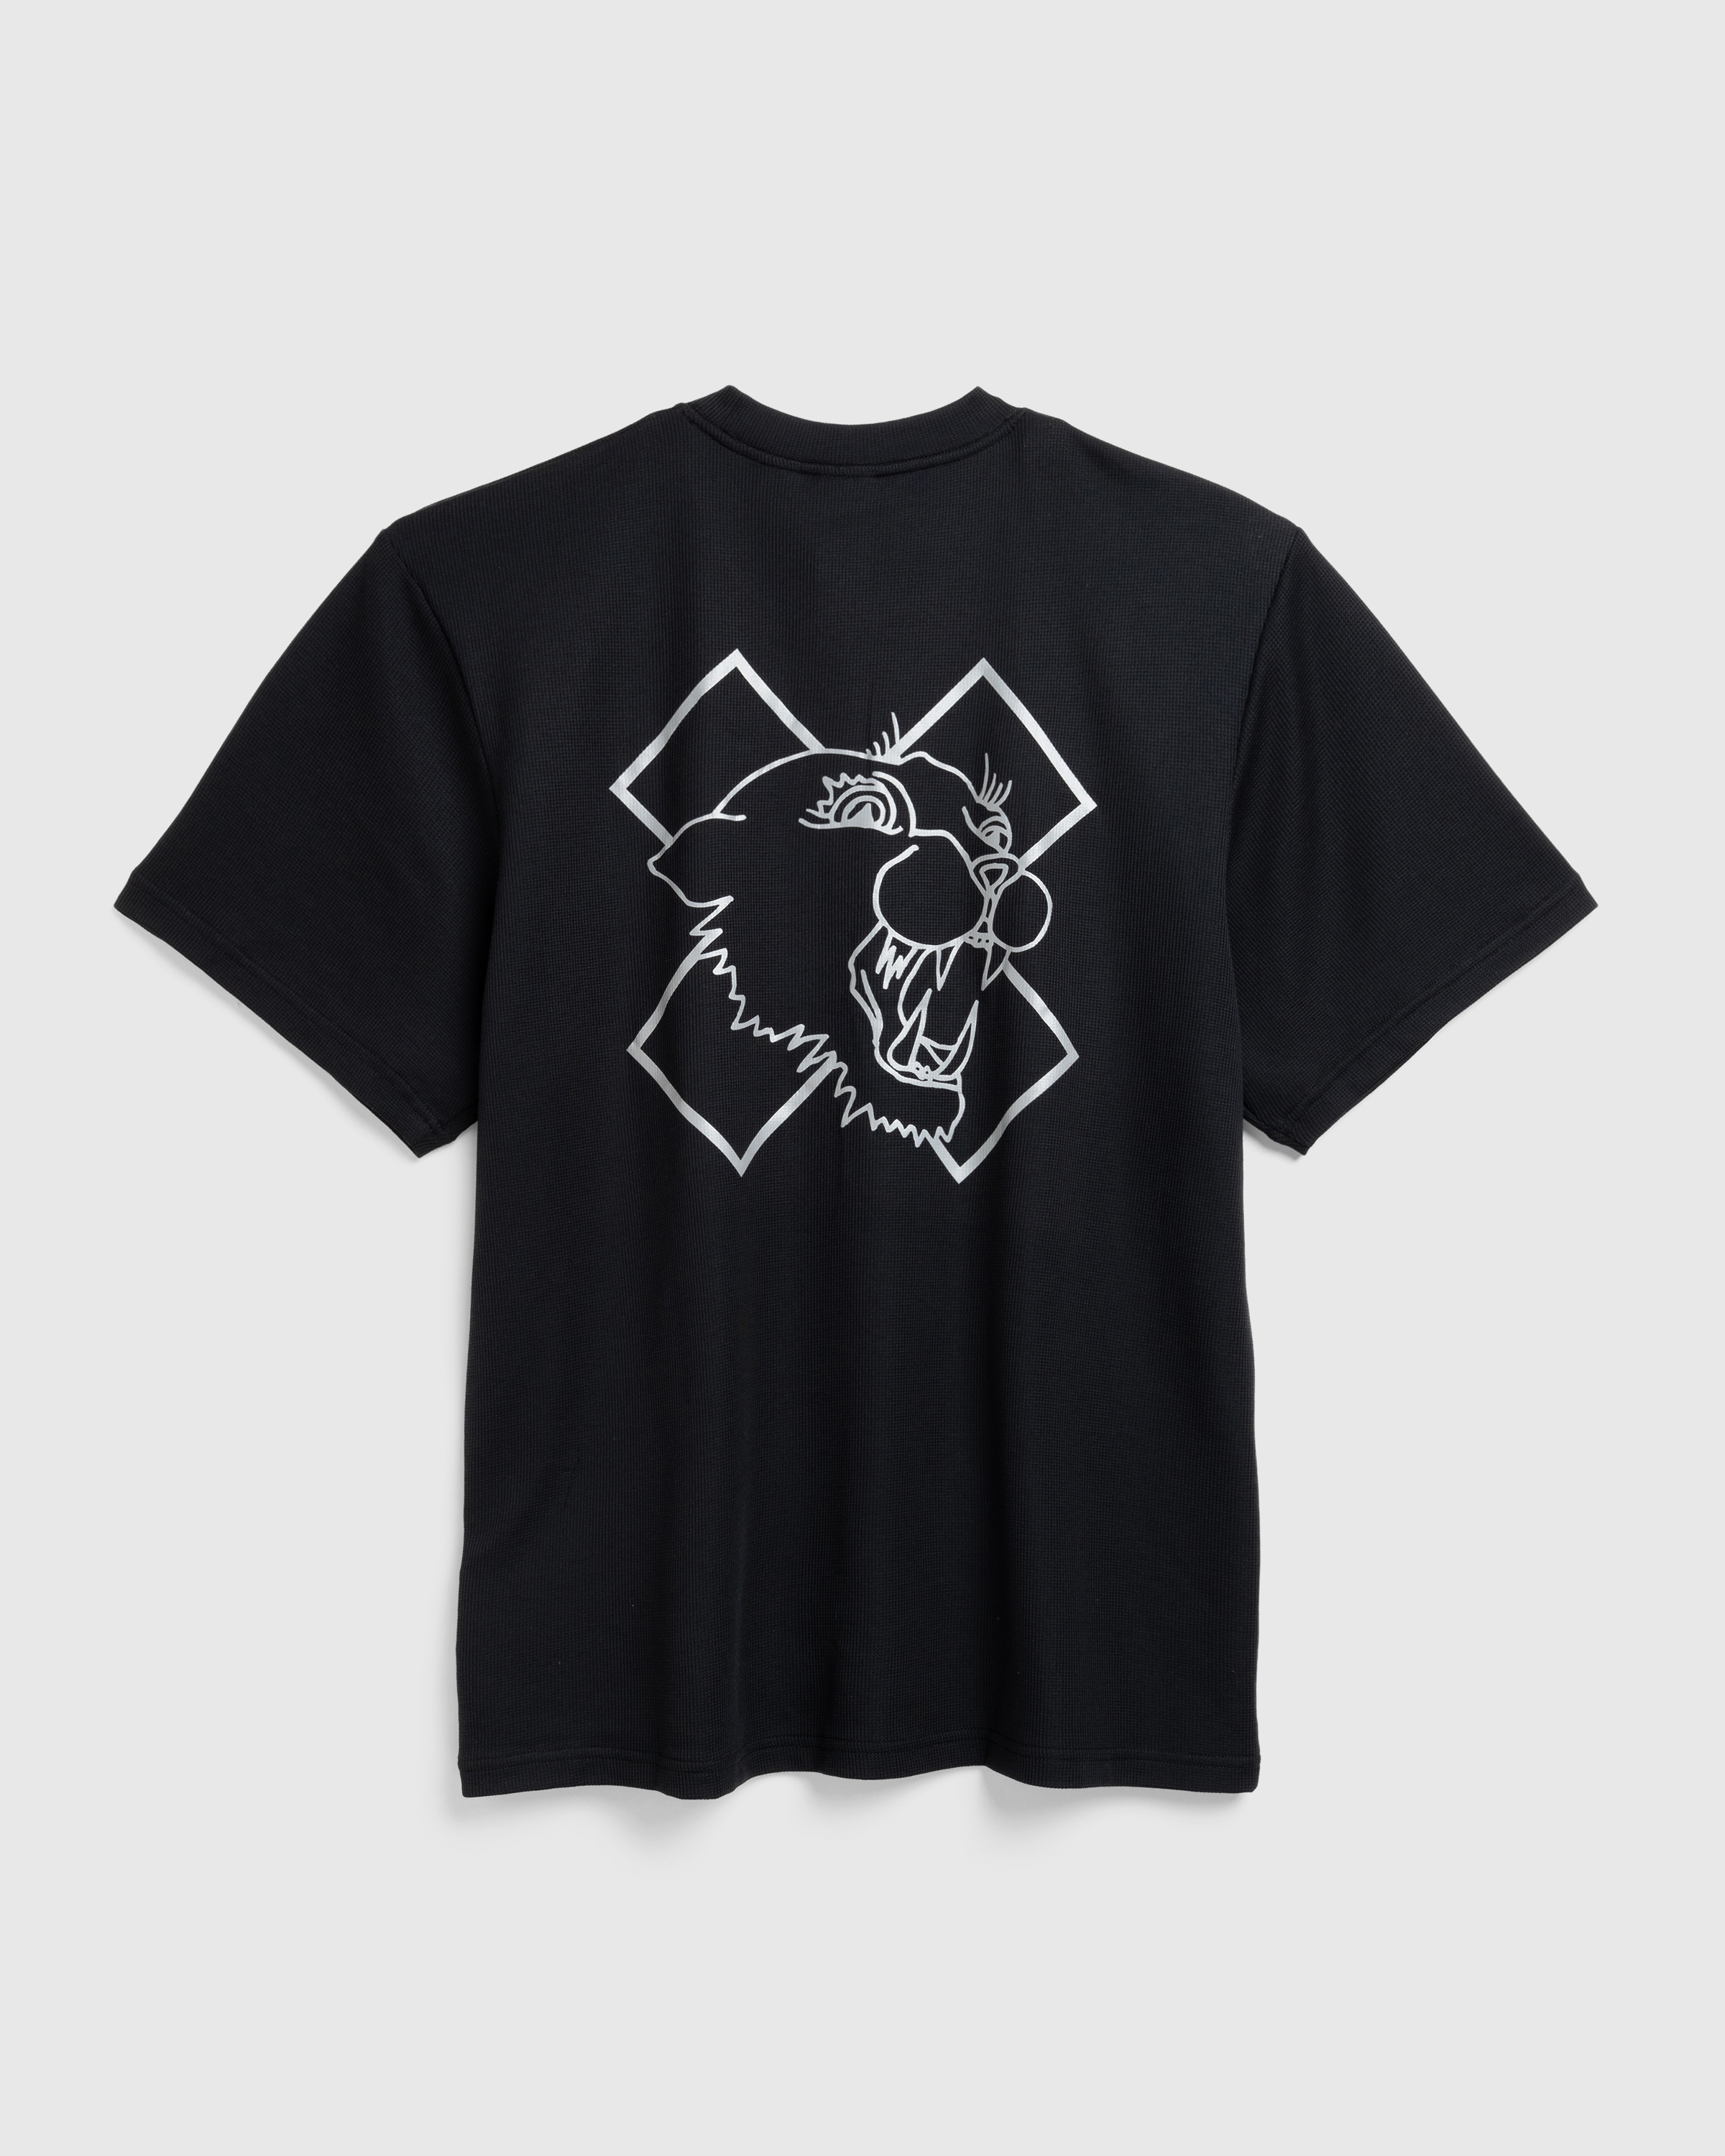 Nike x Patta – Running Team T-Shirt Black - T-Shirts - Black - Image 2